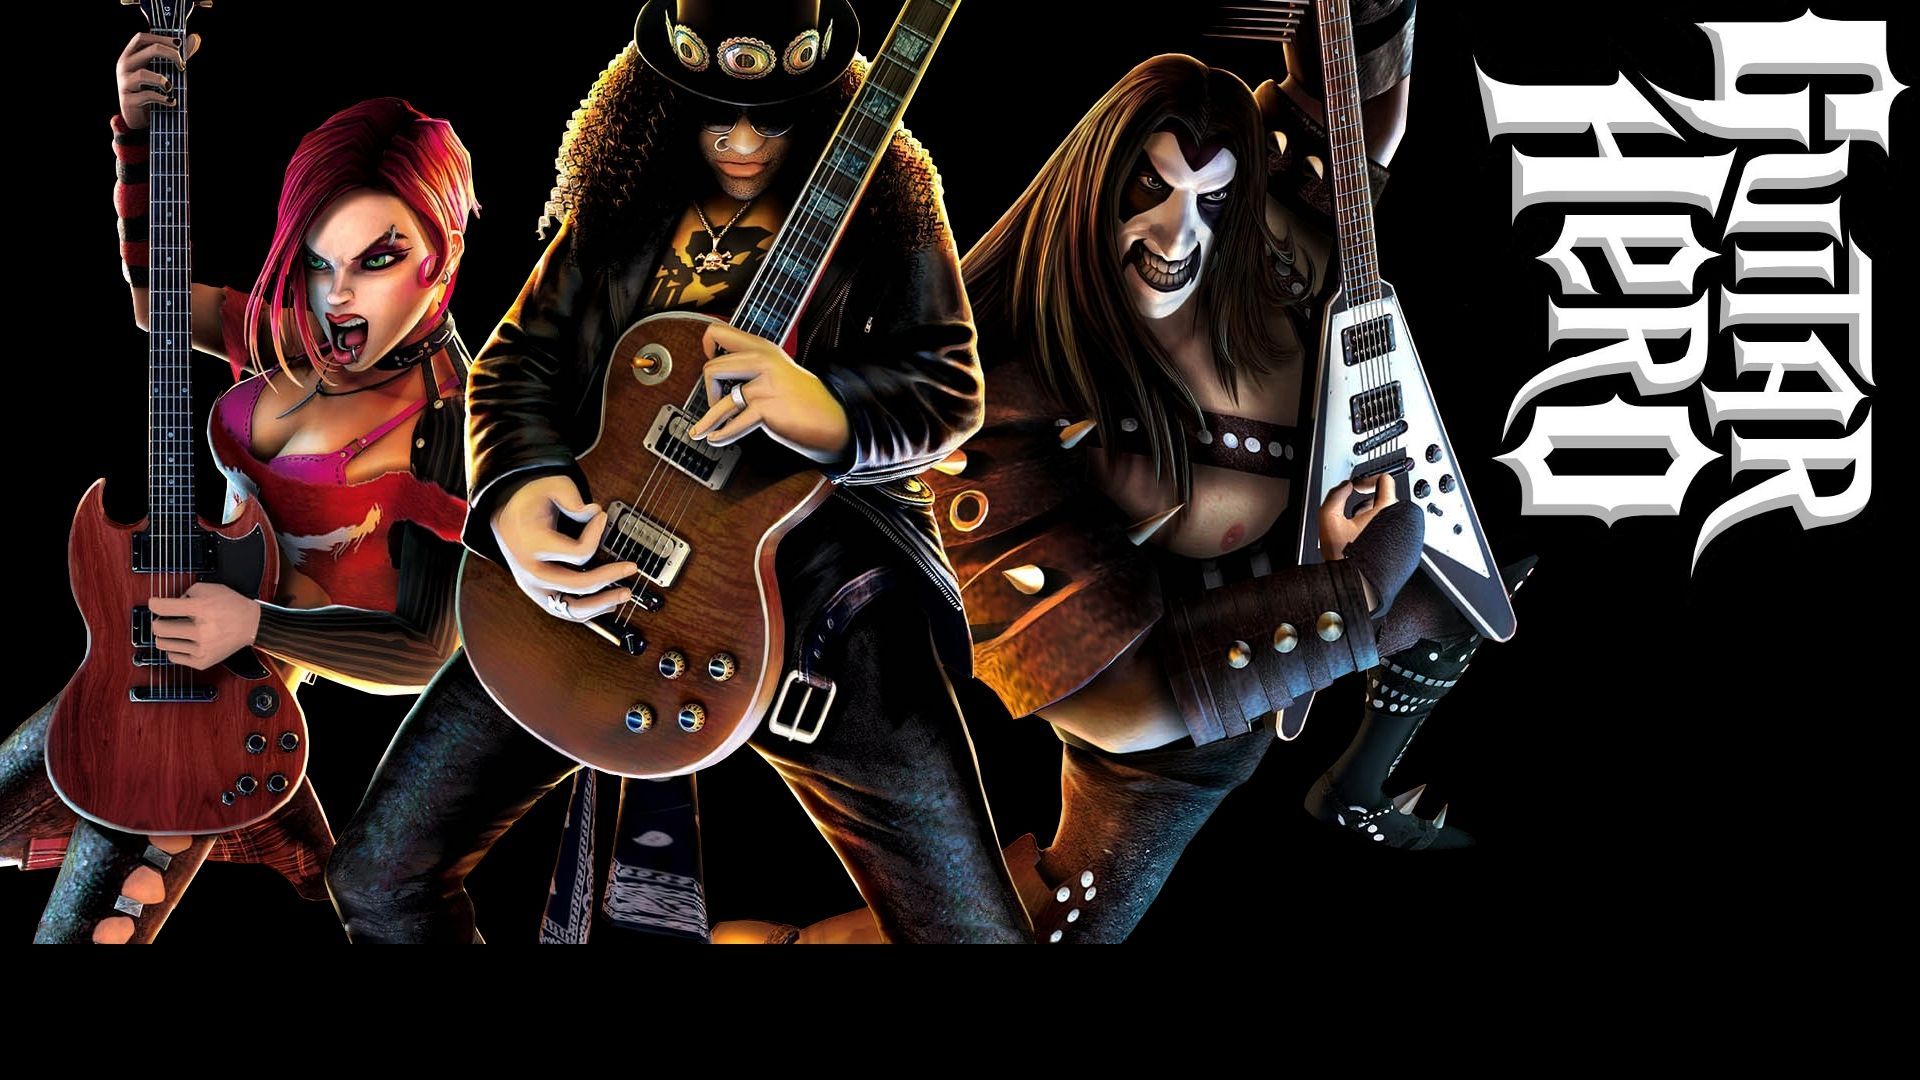 guitar world posters of girls. Guitar Desktop Wallpaper Desktop Background:. Guitar hero, Rap music videos, Apocalyptic love